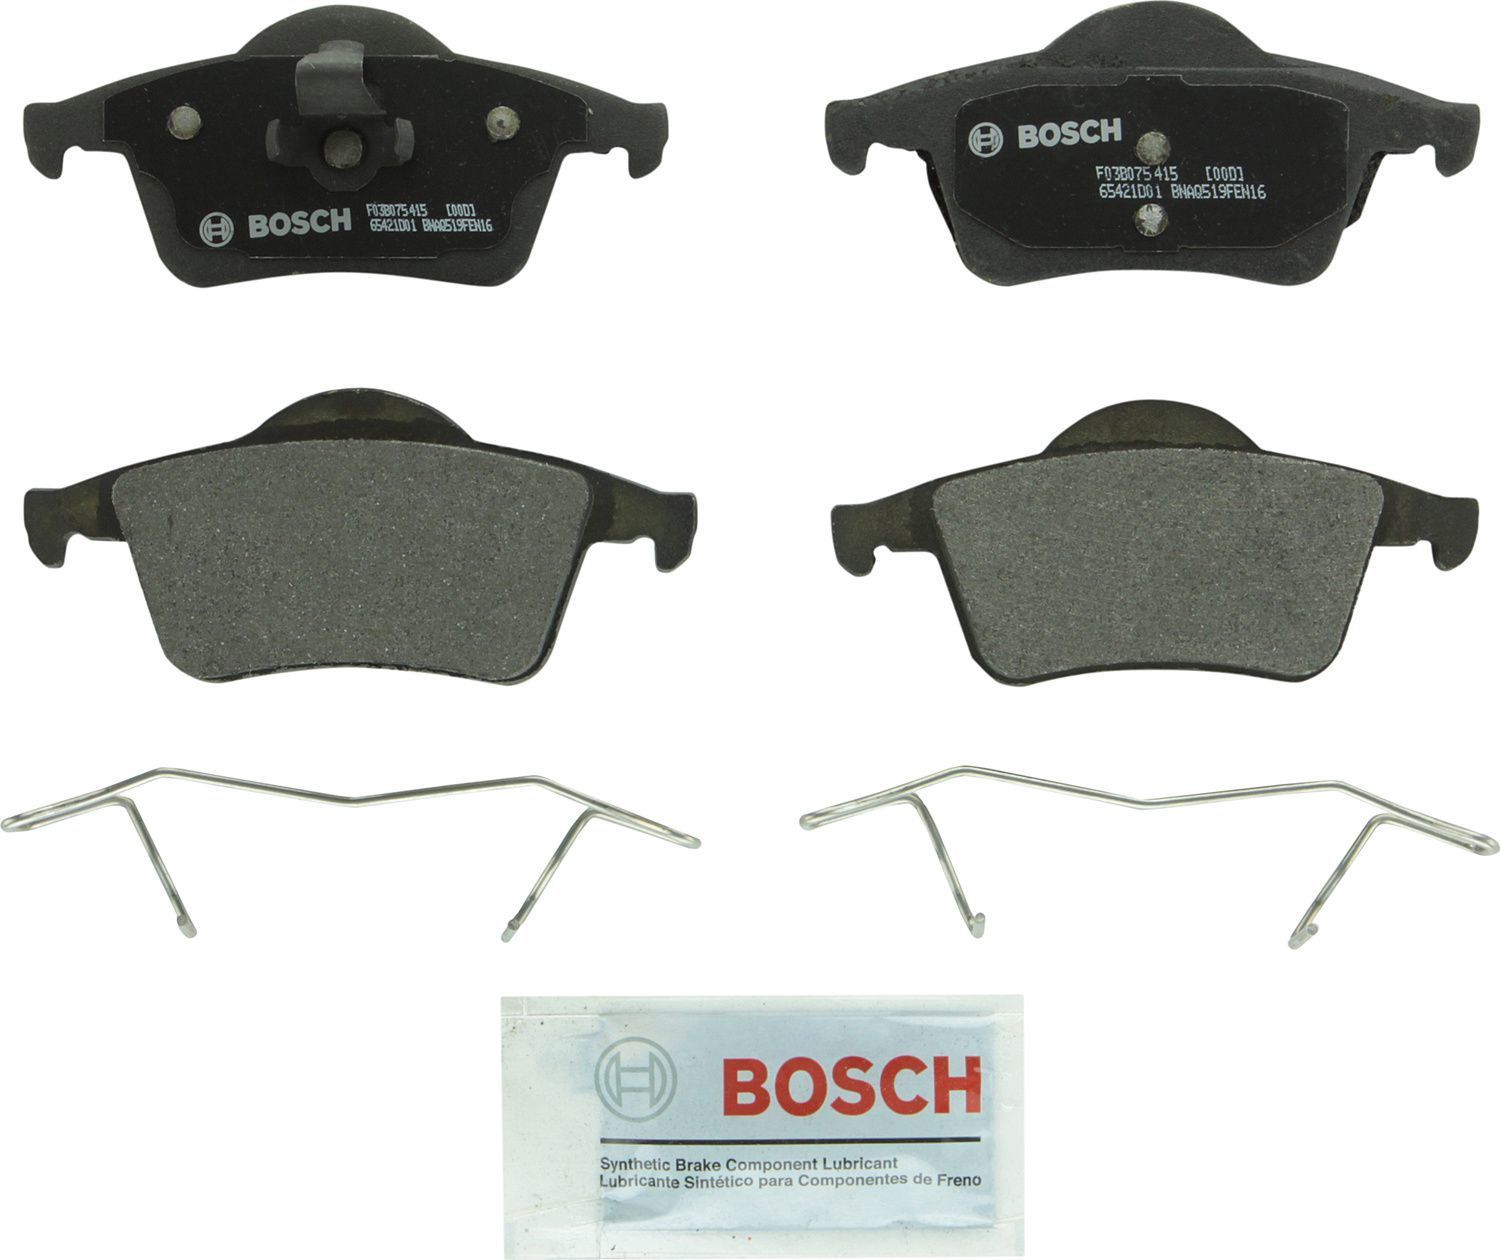 BOSCH BRAKE - Bosch QuietCast Semi-Metallic Brake Pads (Rear) - BQC BP795